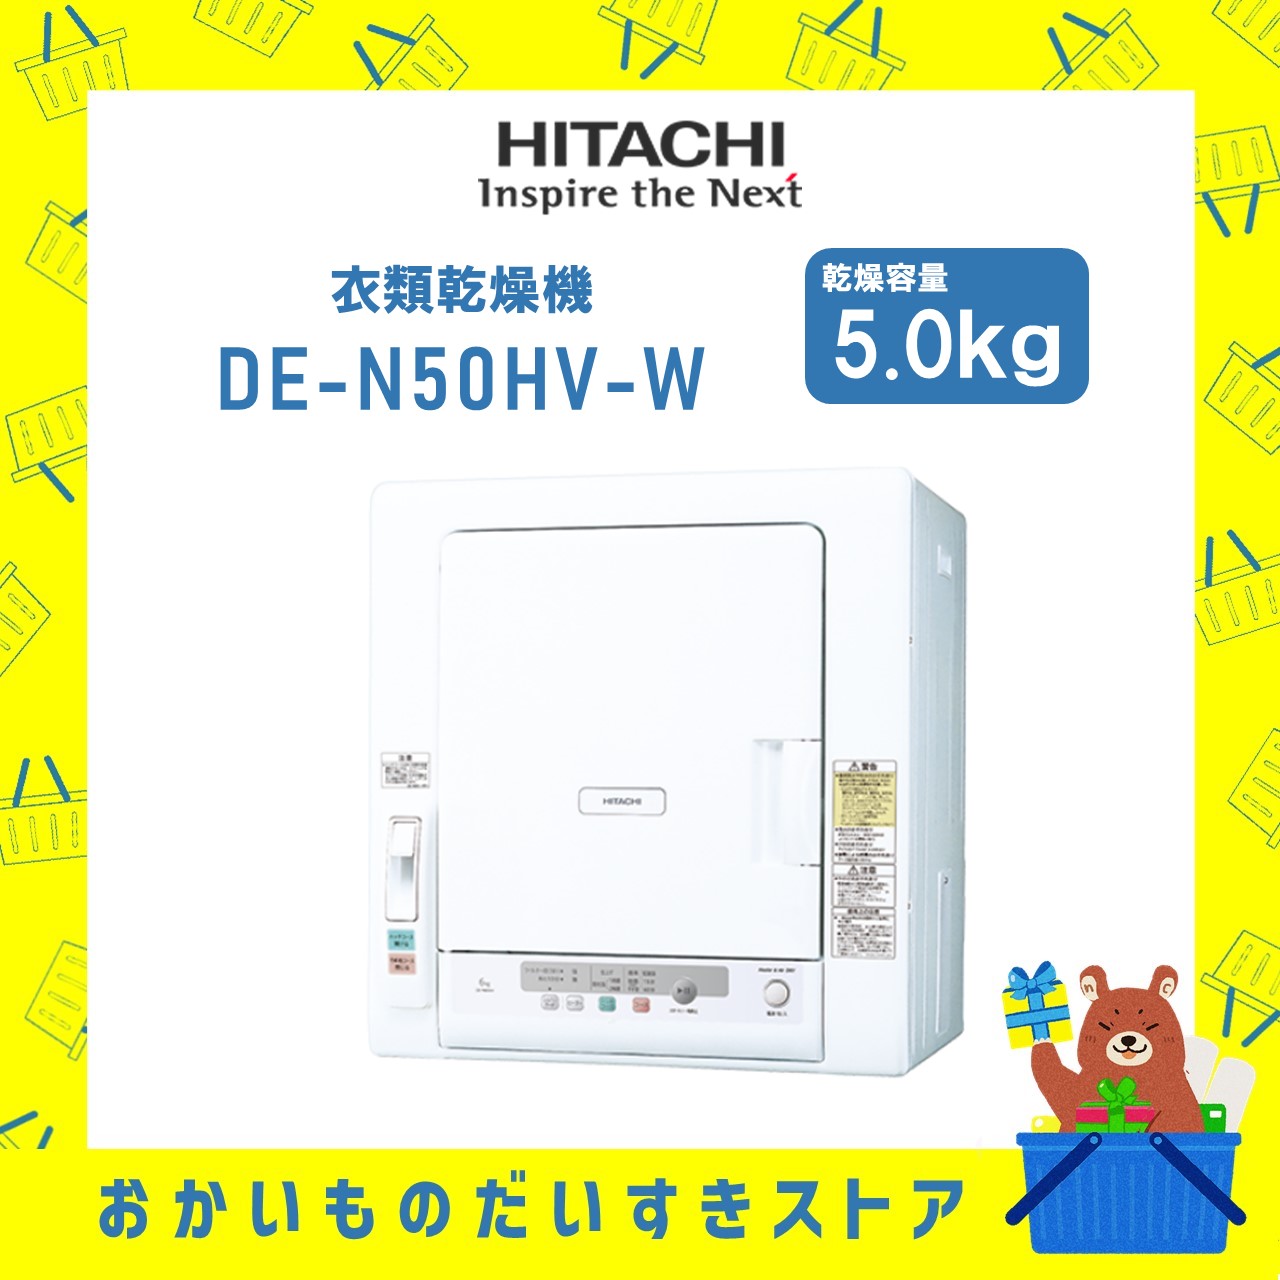  dryer 5kg Hitachi DE-N50HV-W DEN50HVW pure white 2WAY dry low temperature dry delivery only 